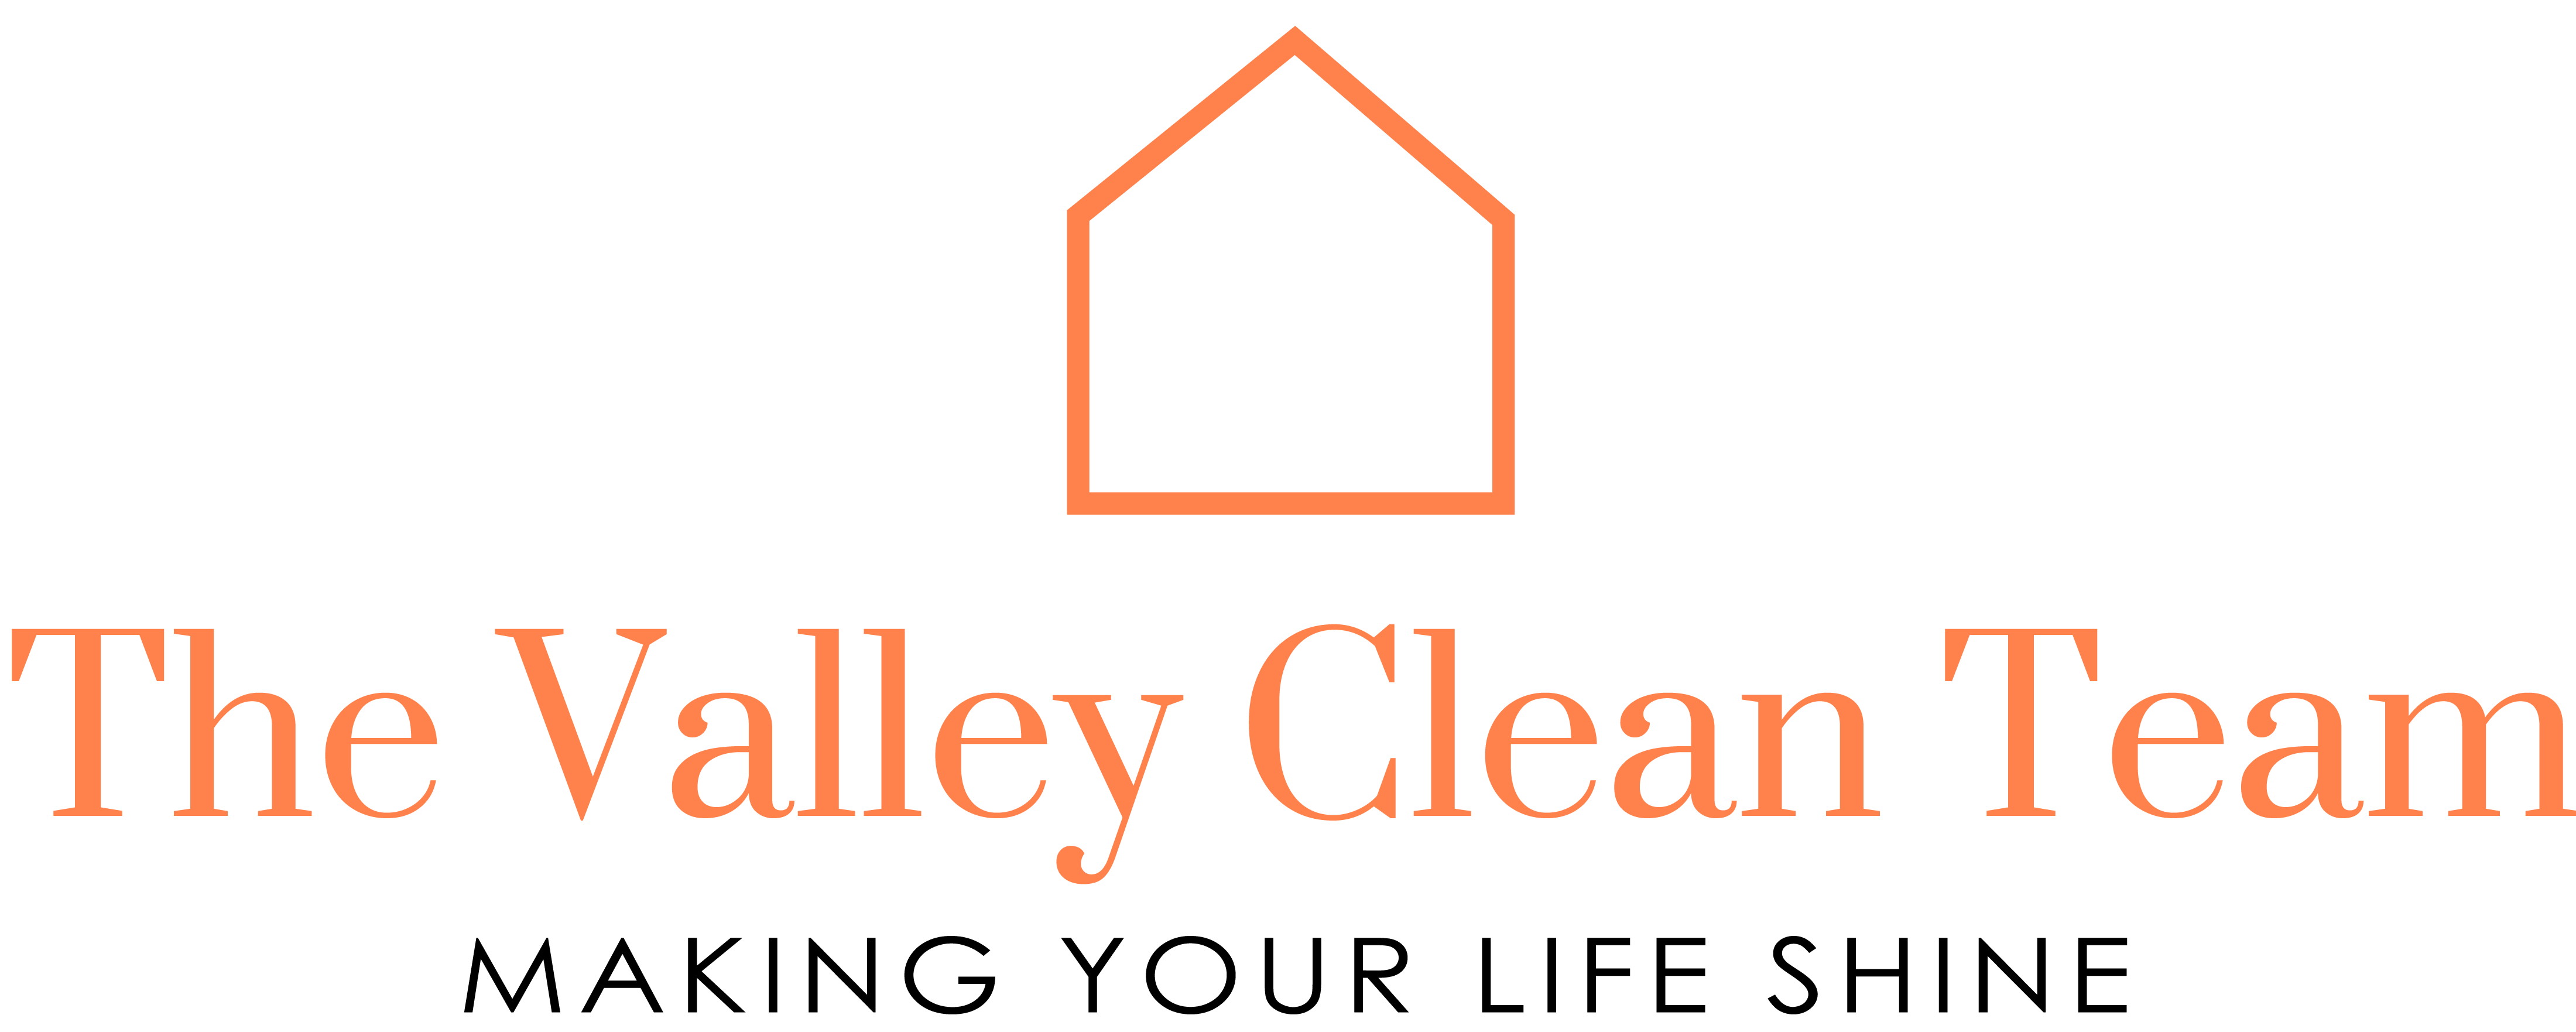 the valley clean team logo